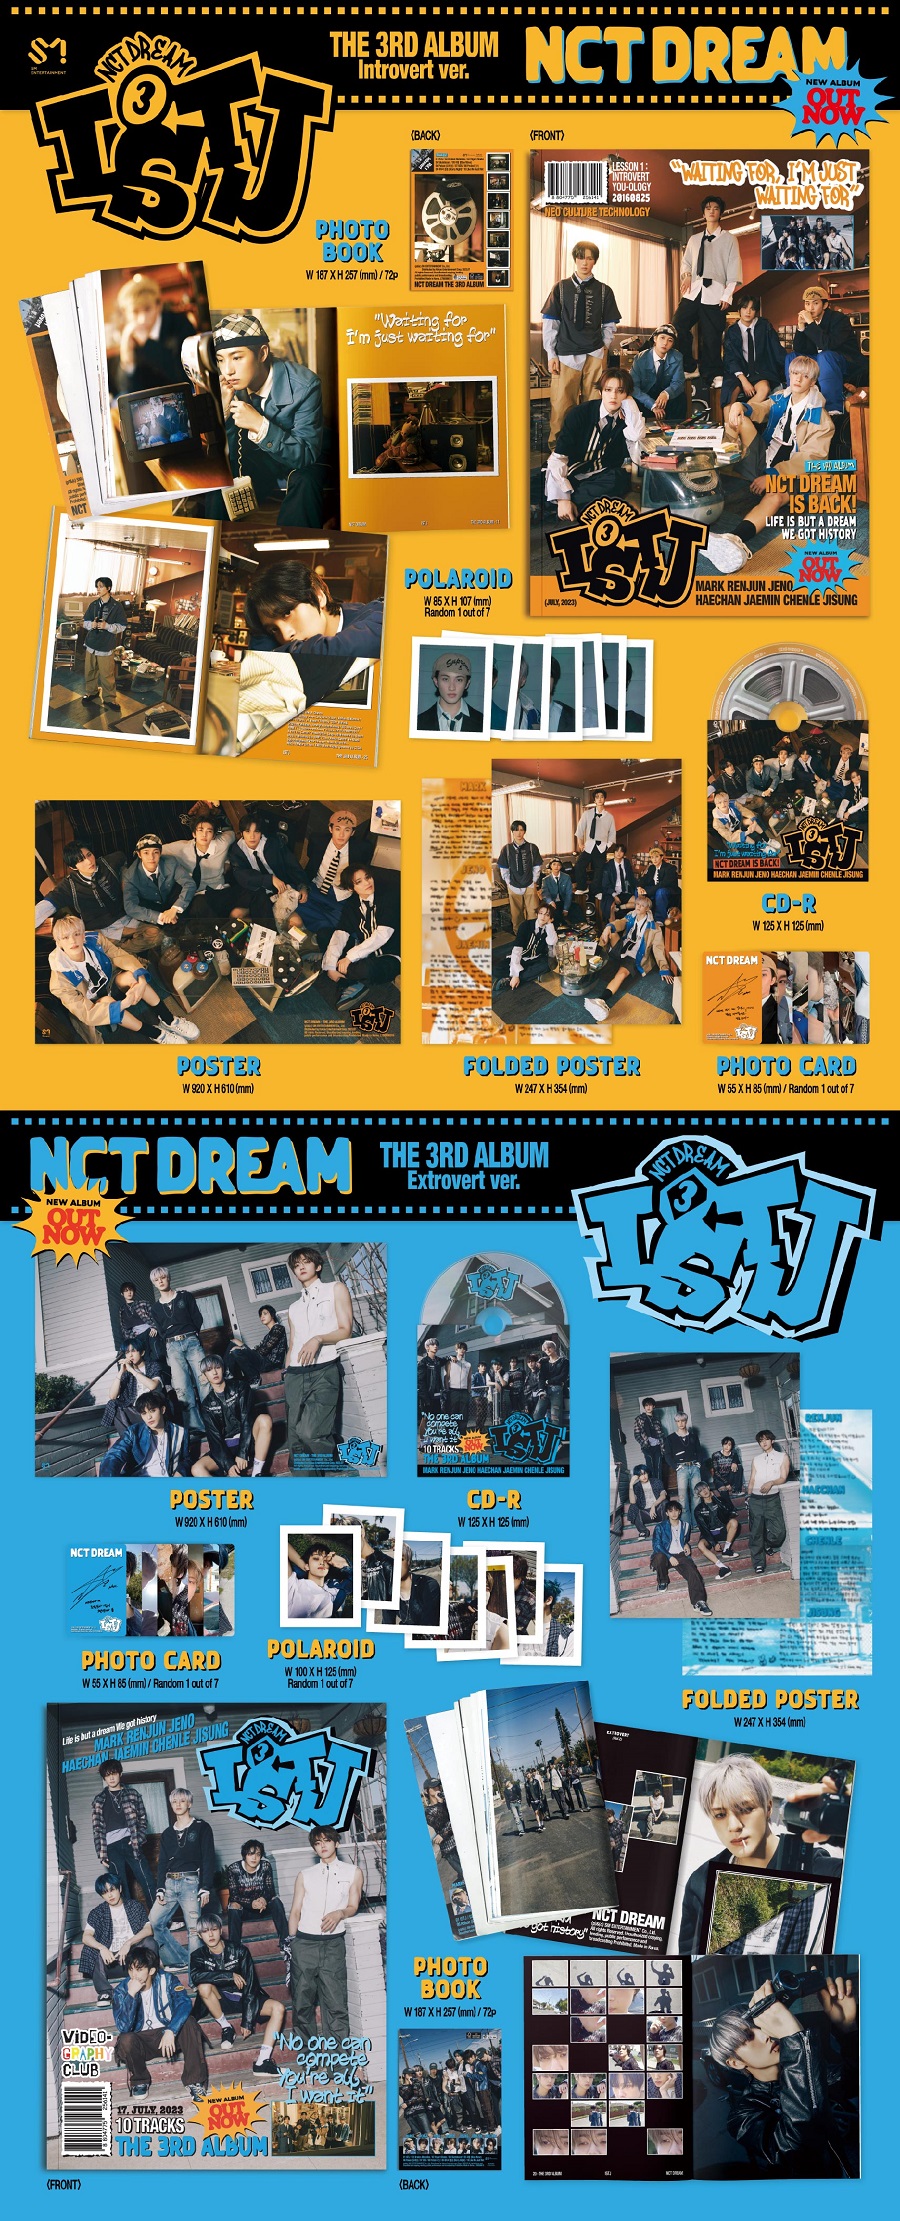 NCT DREAM(엔시티드림) - 정규 3집 [ISTJ] (Photobook Ver.) 커버랜덤